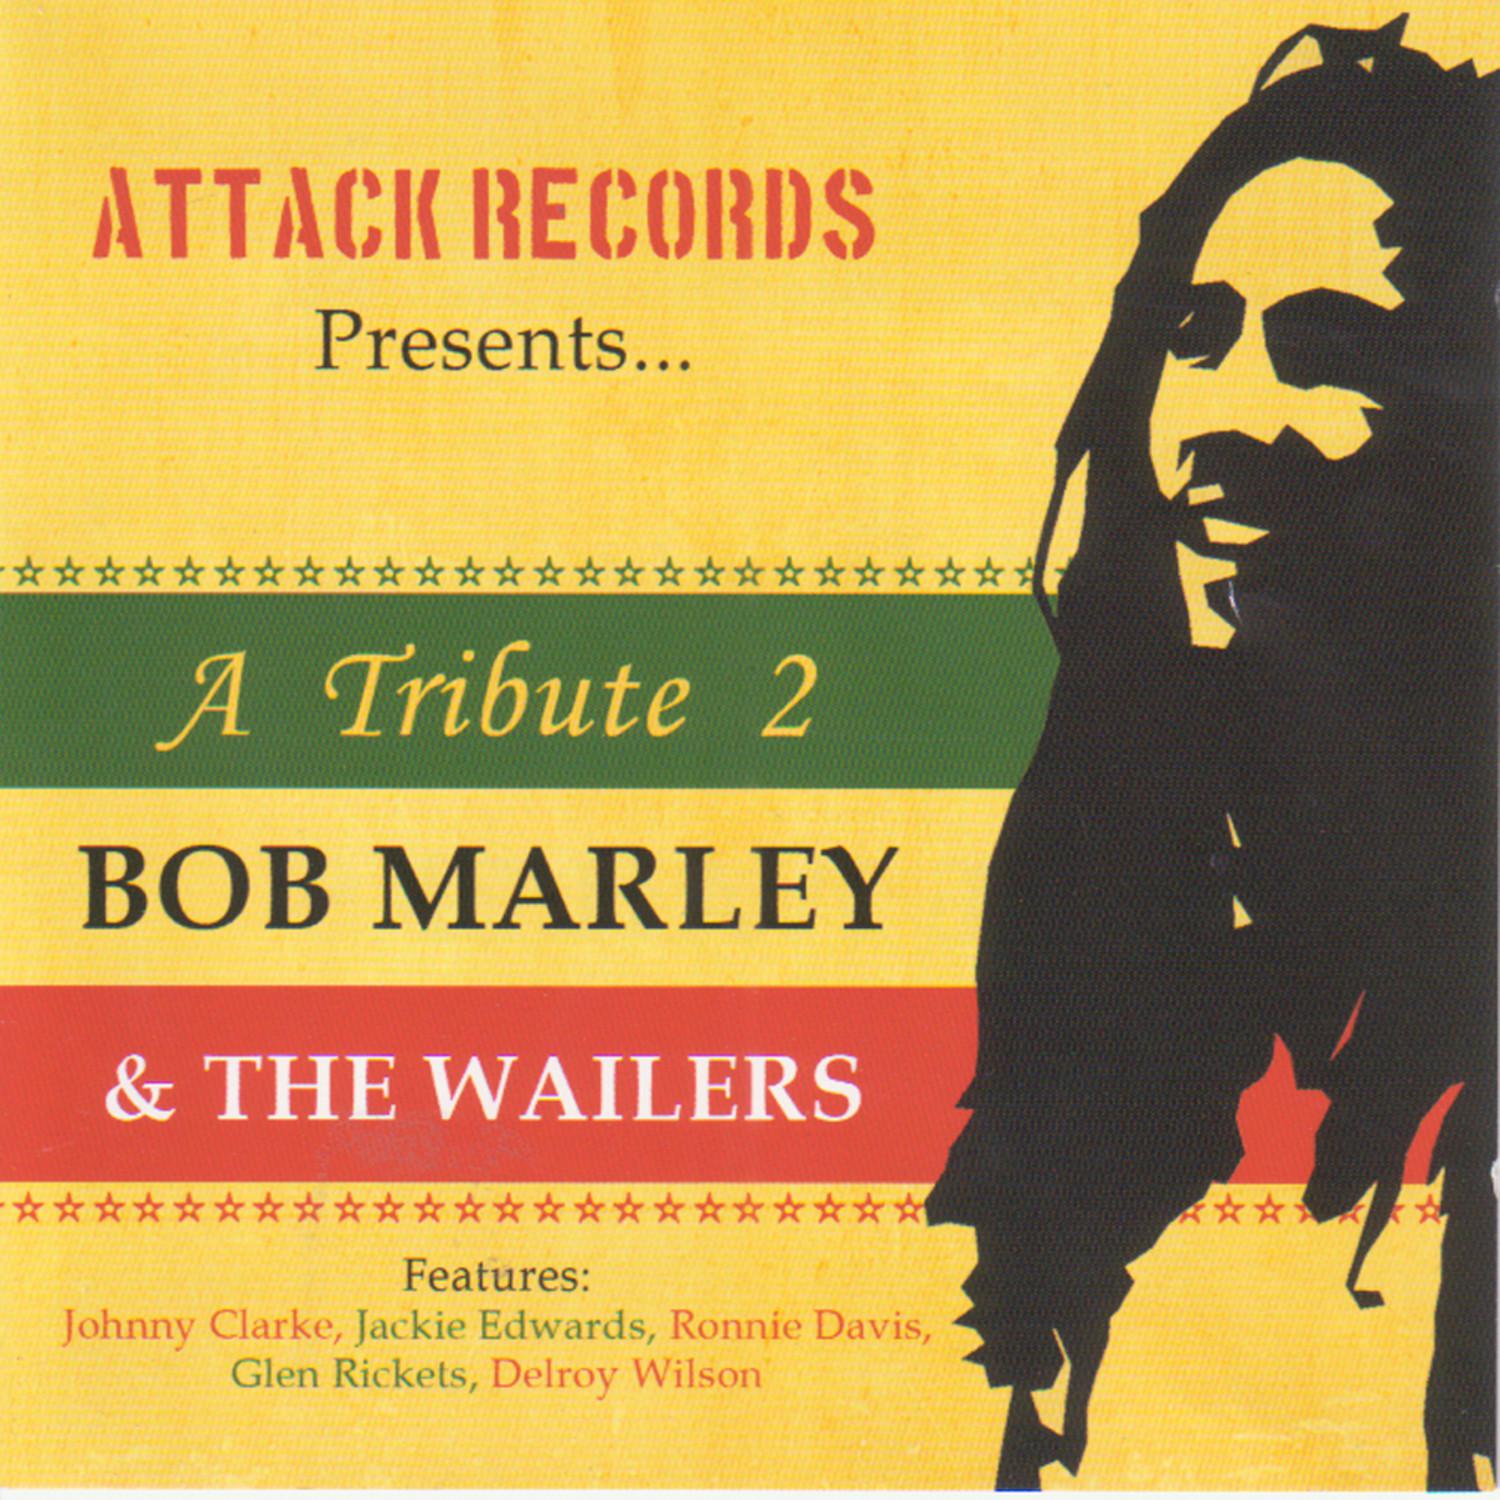 A Tribute 2 Bob Marley & The Wailers